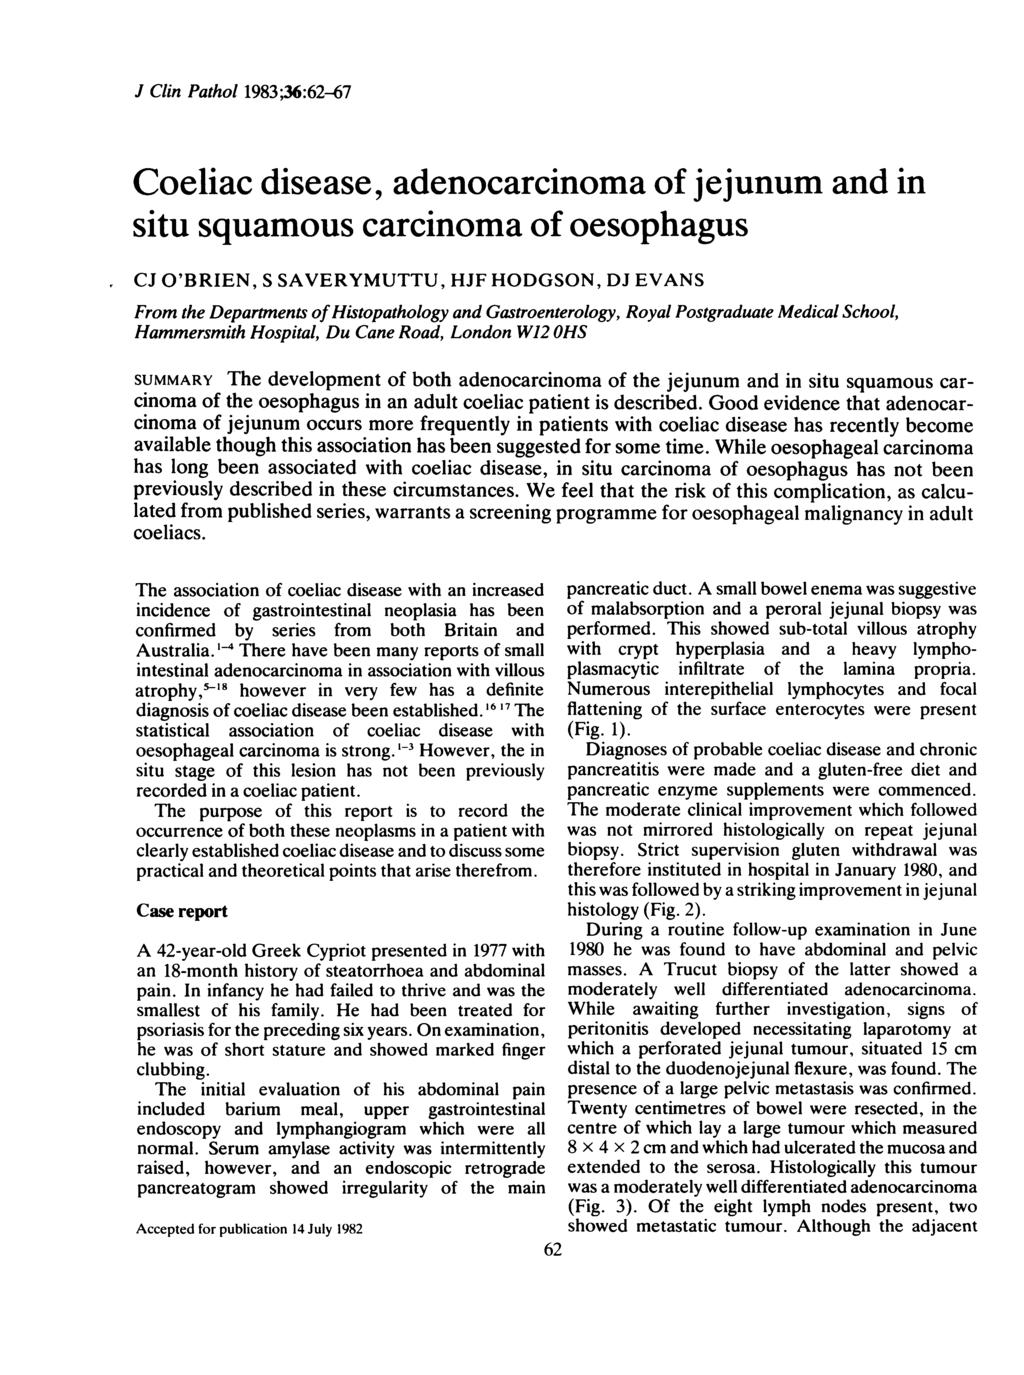 J Clin Pathol 1983;36:62-67 Coeliac disease, adenocarcinoma of jejunum and in situ squamous carcinoma of oesophagus CJ O'BRIEN, S SAVERYMUTTU, HJF HODGSON, DJ EVANS From the Departments